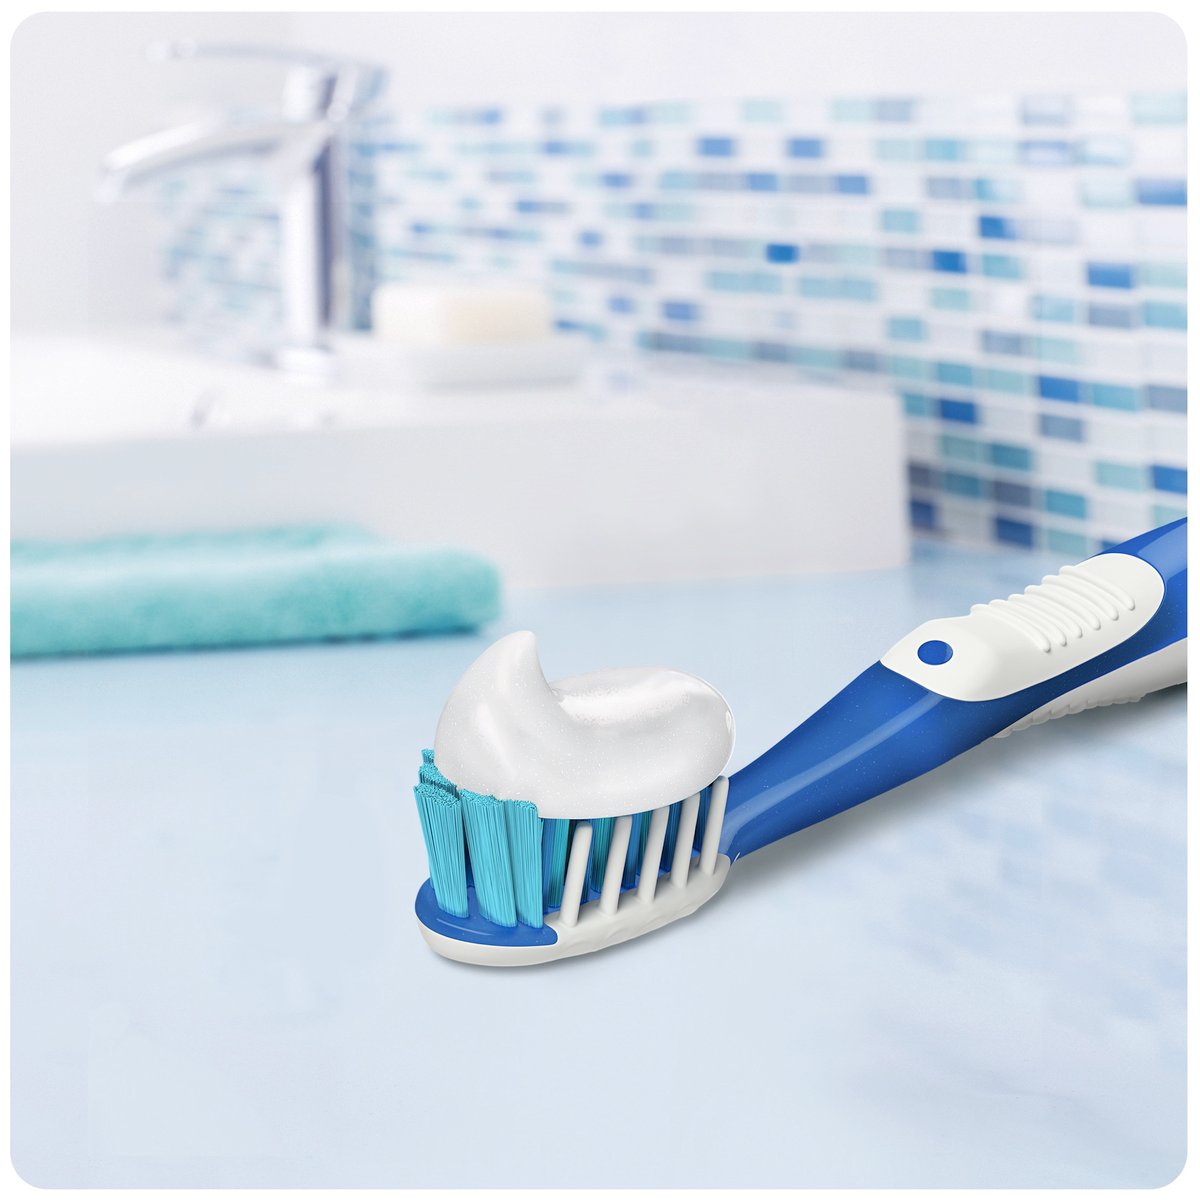 Crest 3D White Toothpaste Whitening Sensitive 75ml